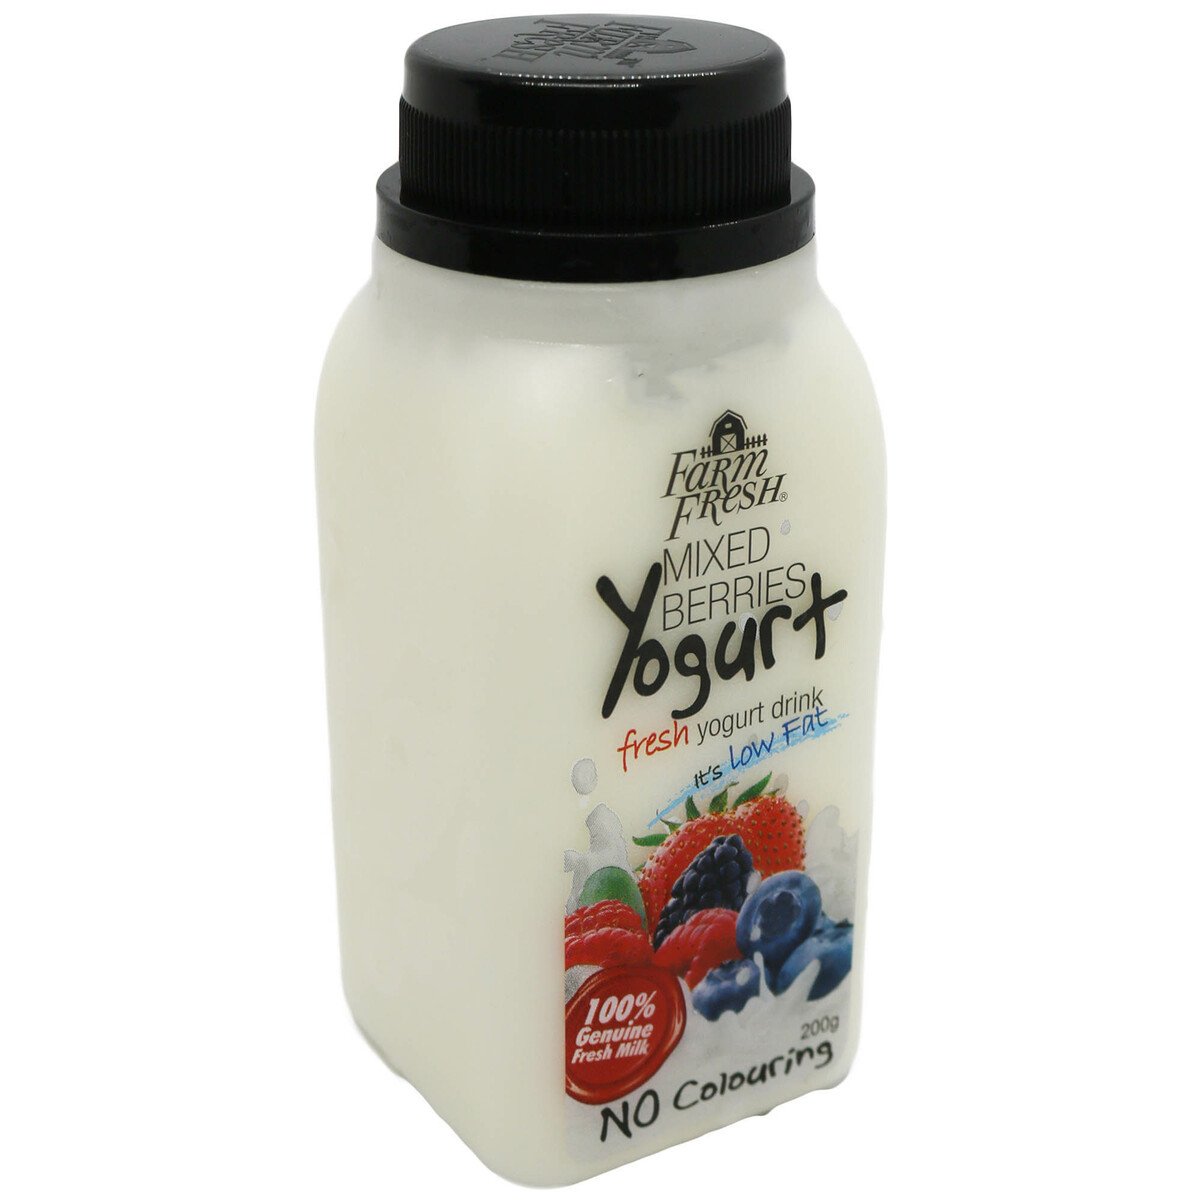 Farm Fresh Yogurt Drink Mixed Berries 200g